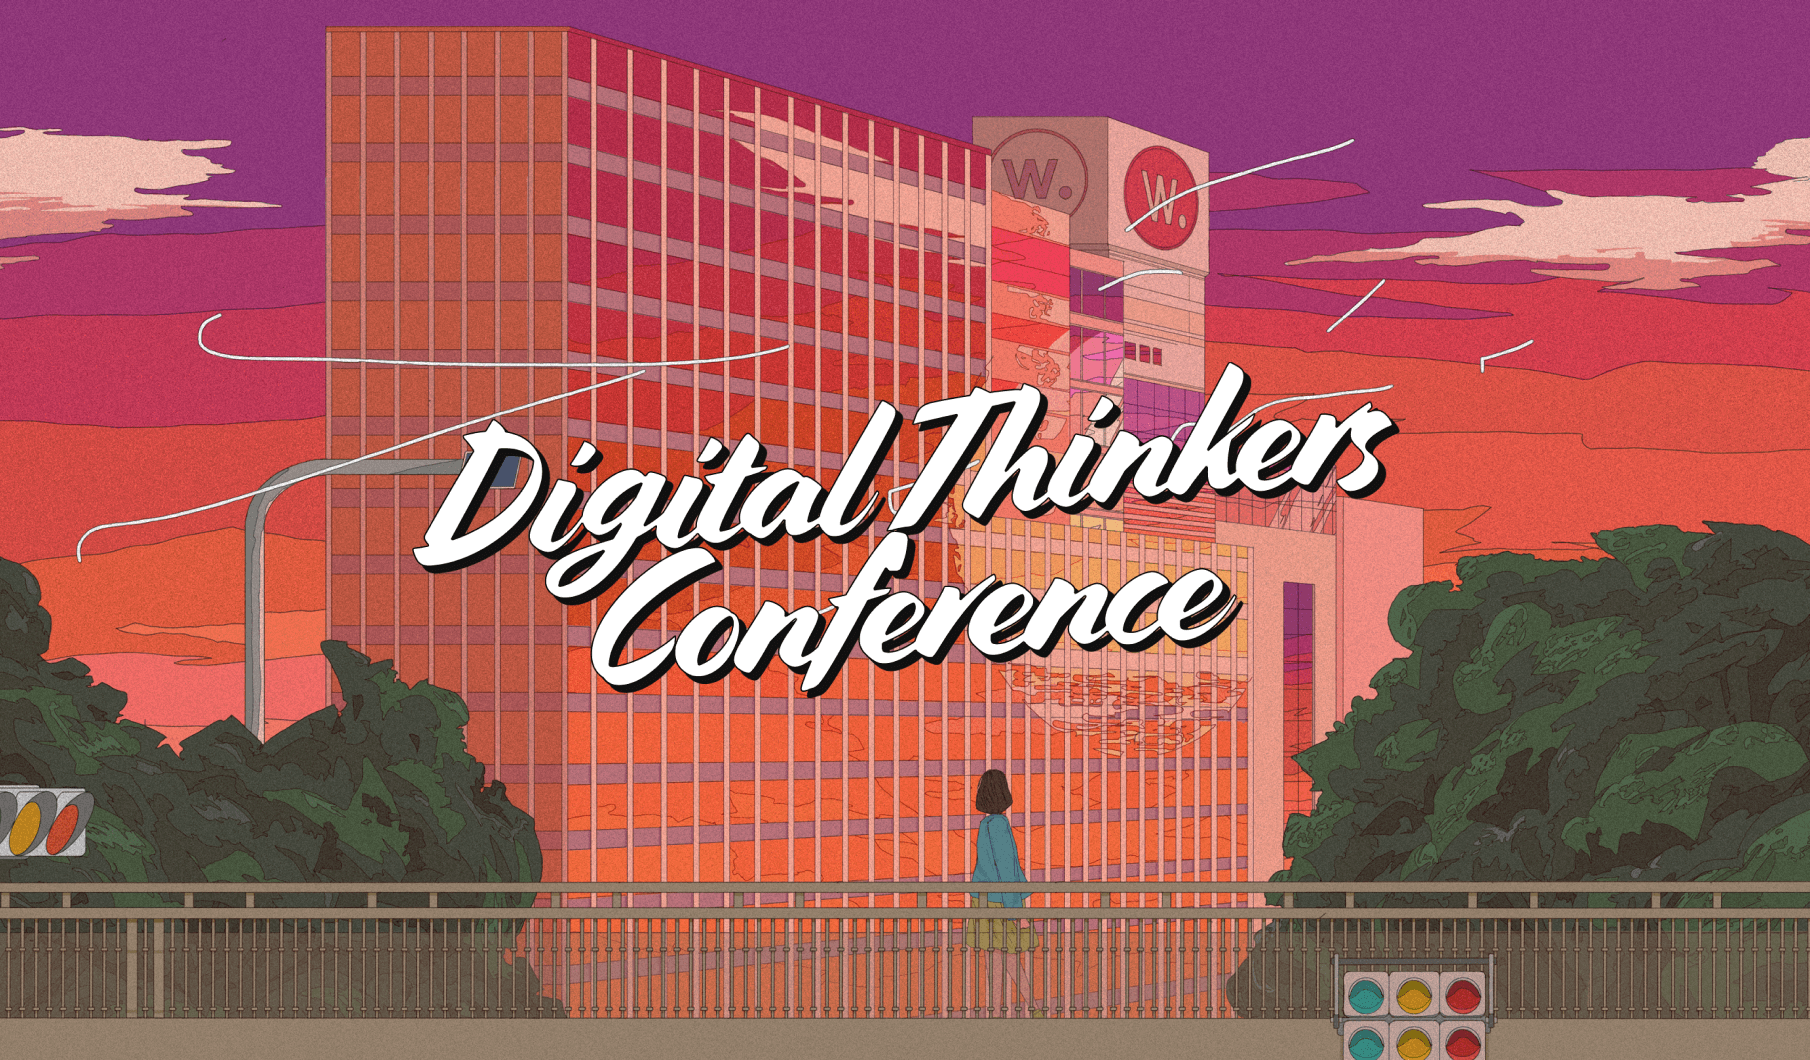 Awwards. Awwwards Digital Thinkers Conference Tokyo 2020. Awwwards. Tokyo Convention.